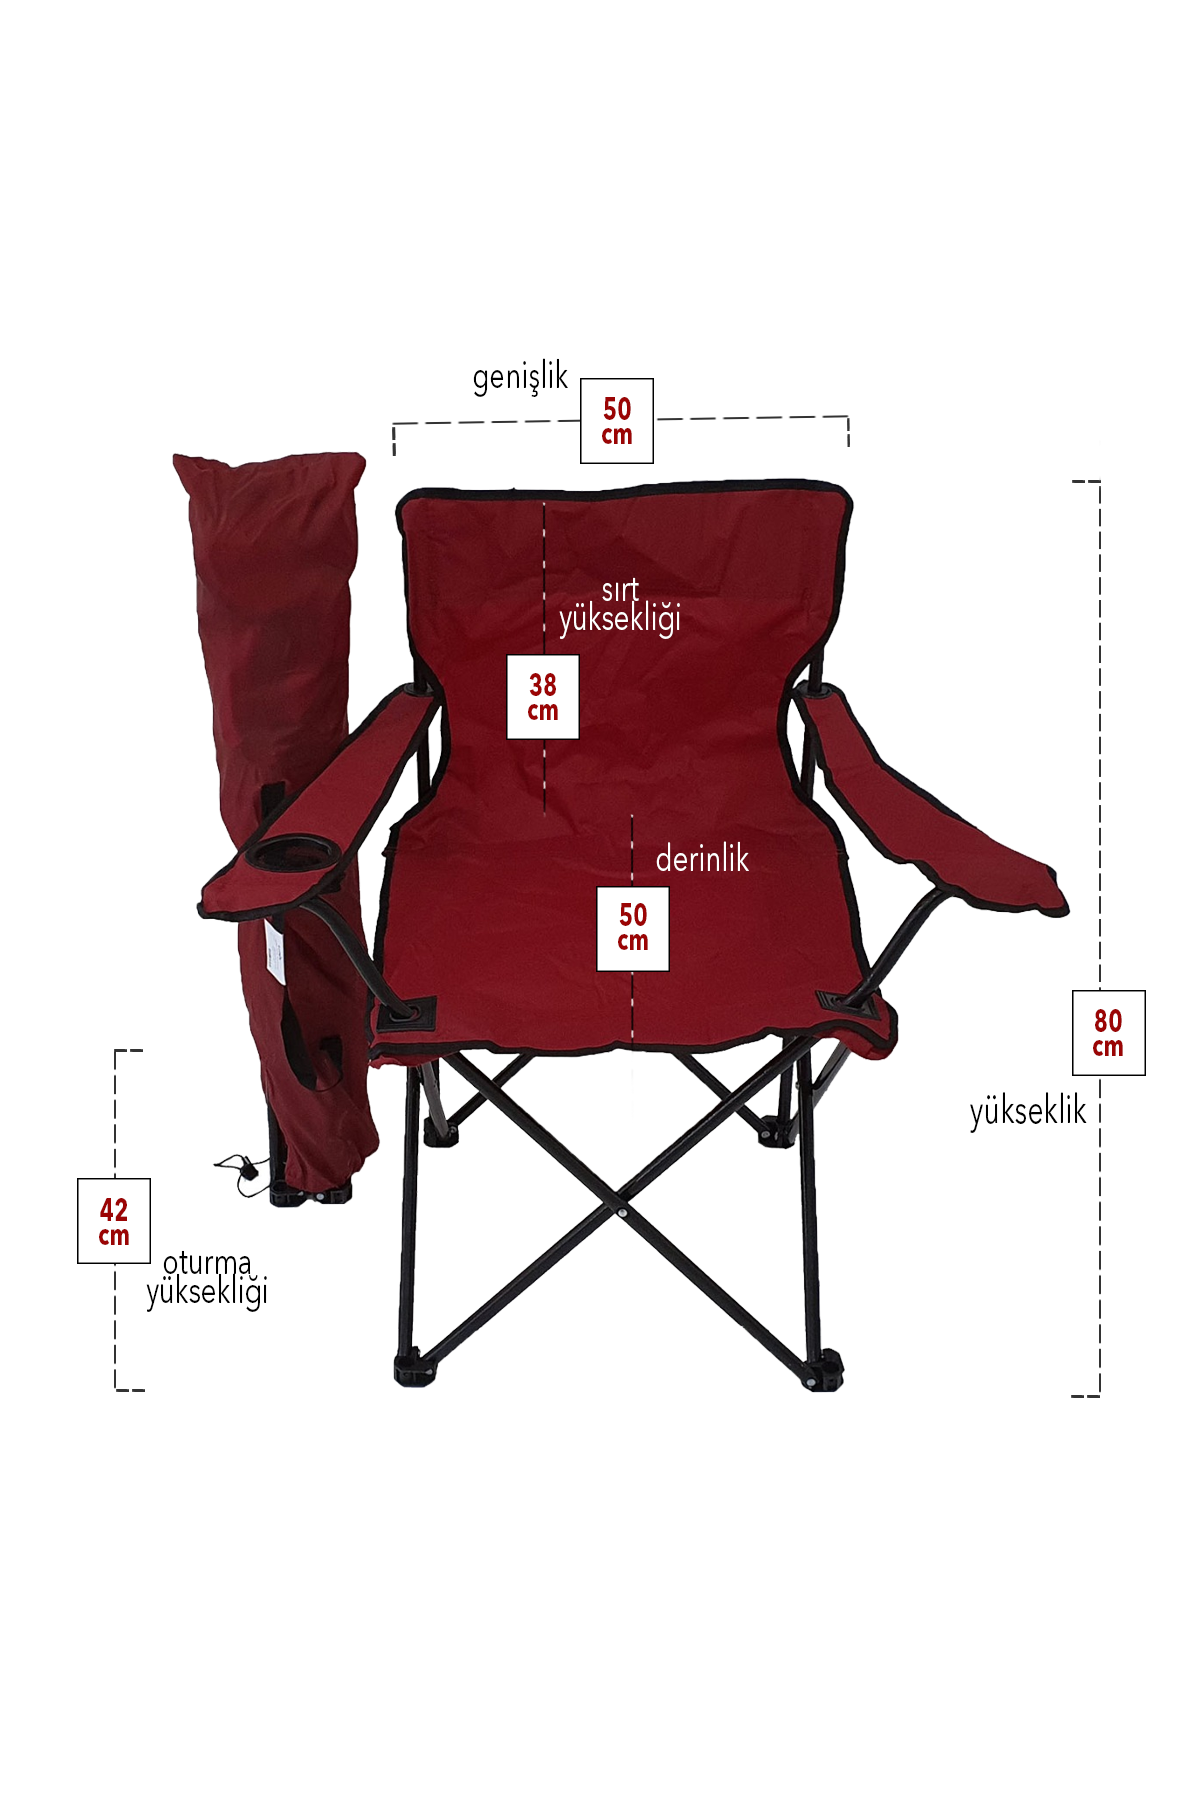 Bofigo 3-Seat Camping Chair Picnic Chair Folding Chair Camping Chair Red with Carrying Bag